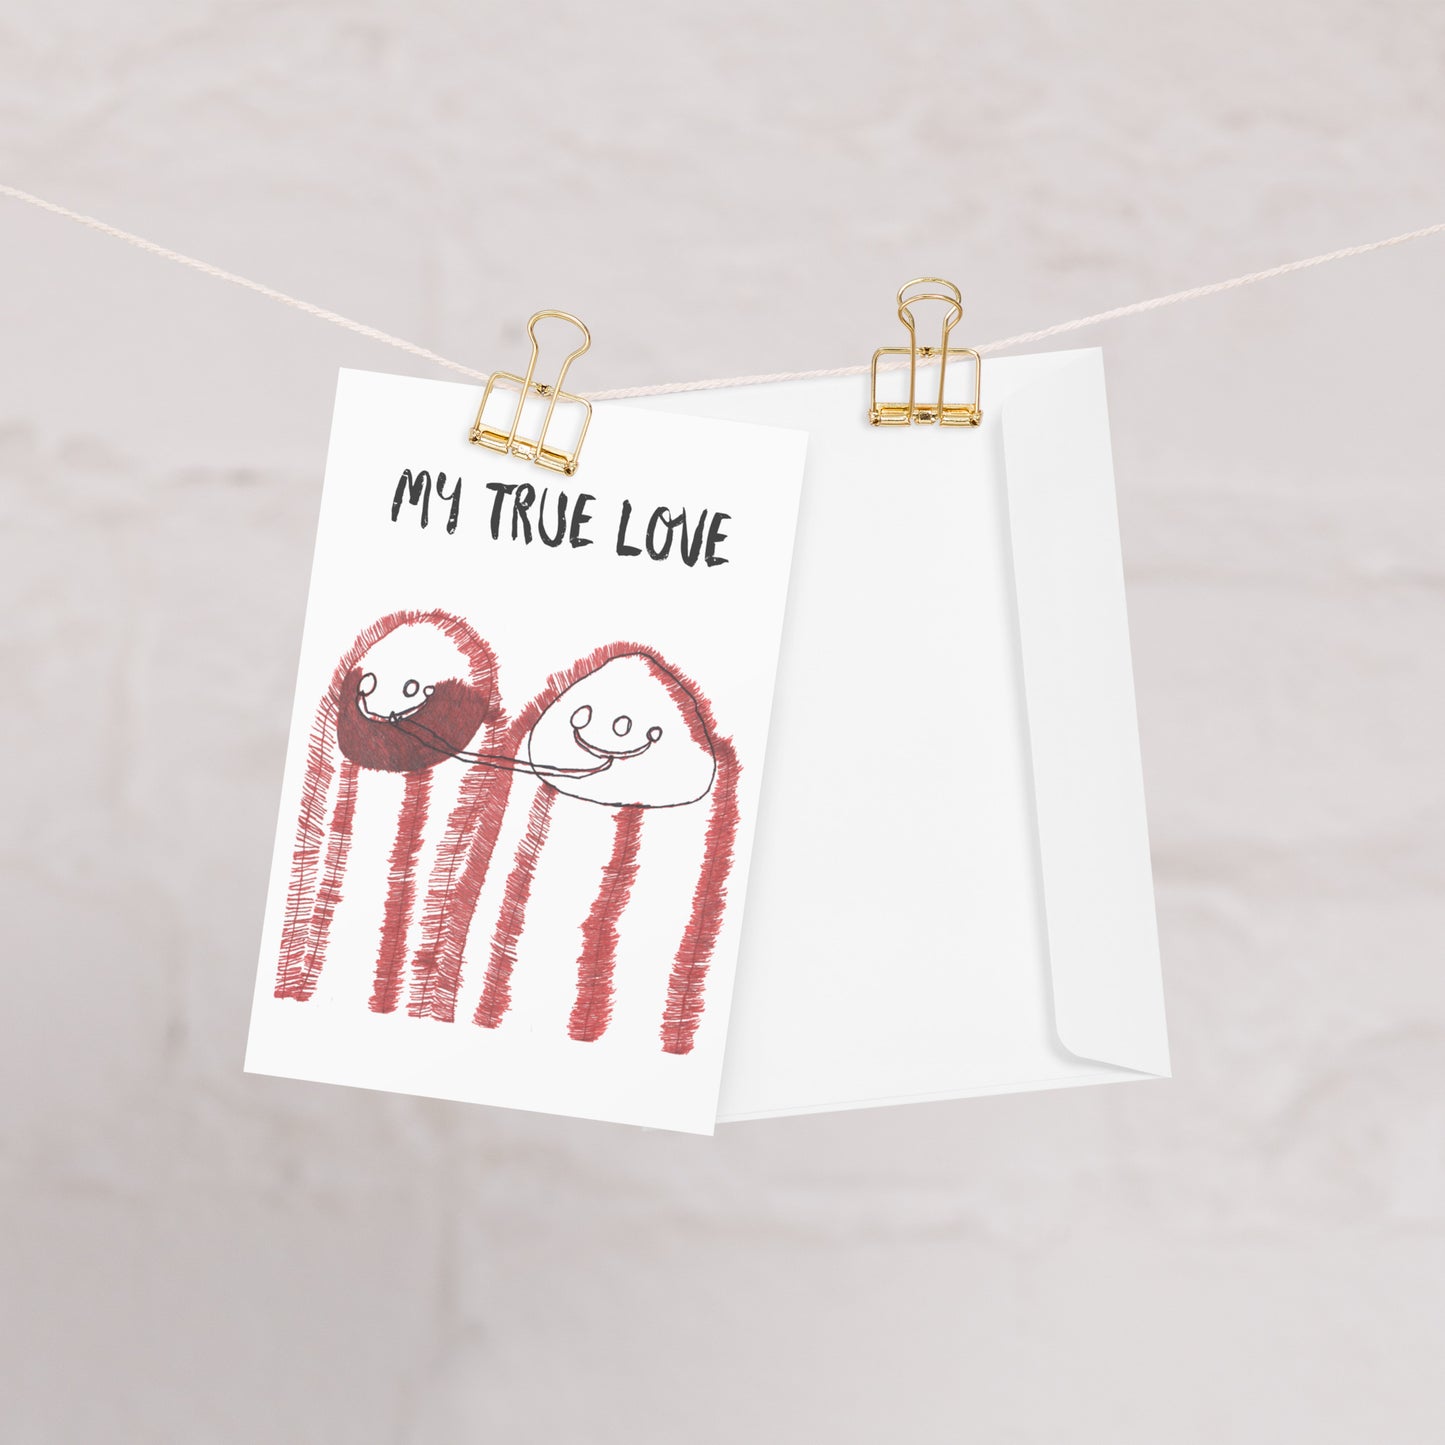 Greeting card - "My True Love"